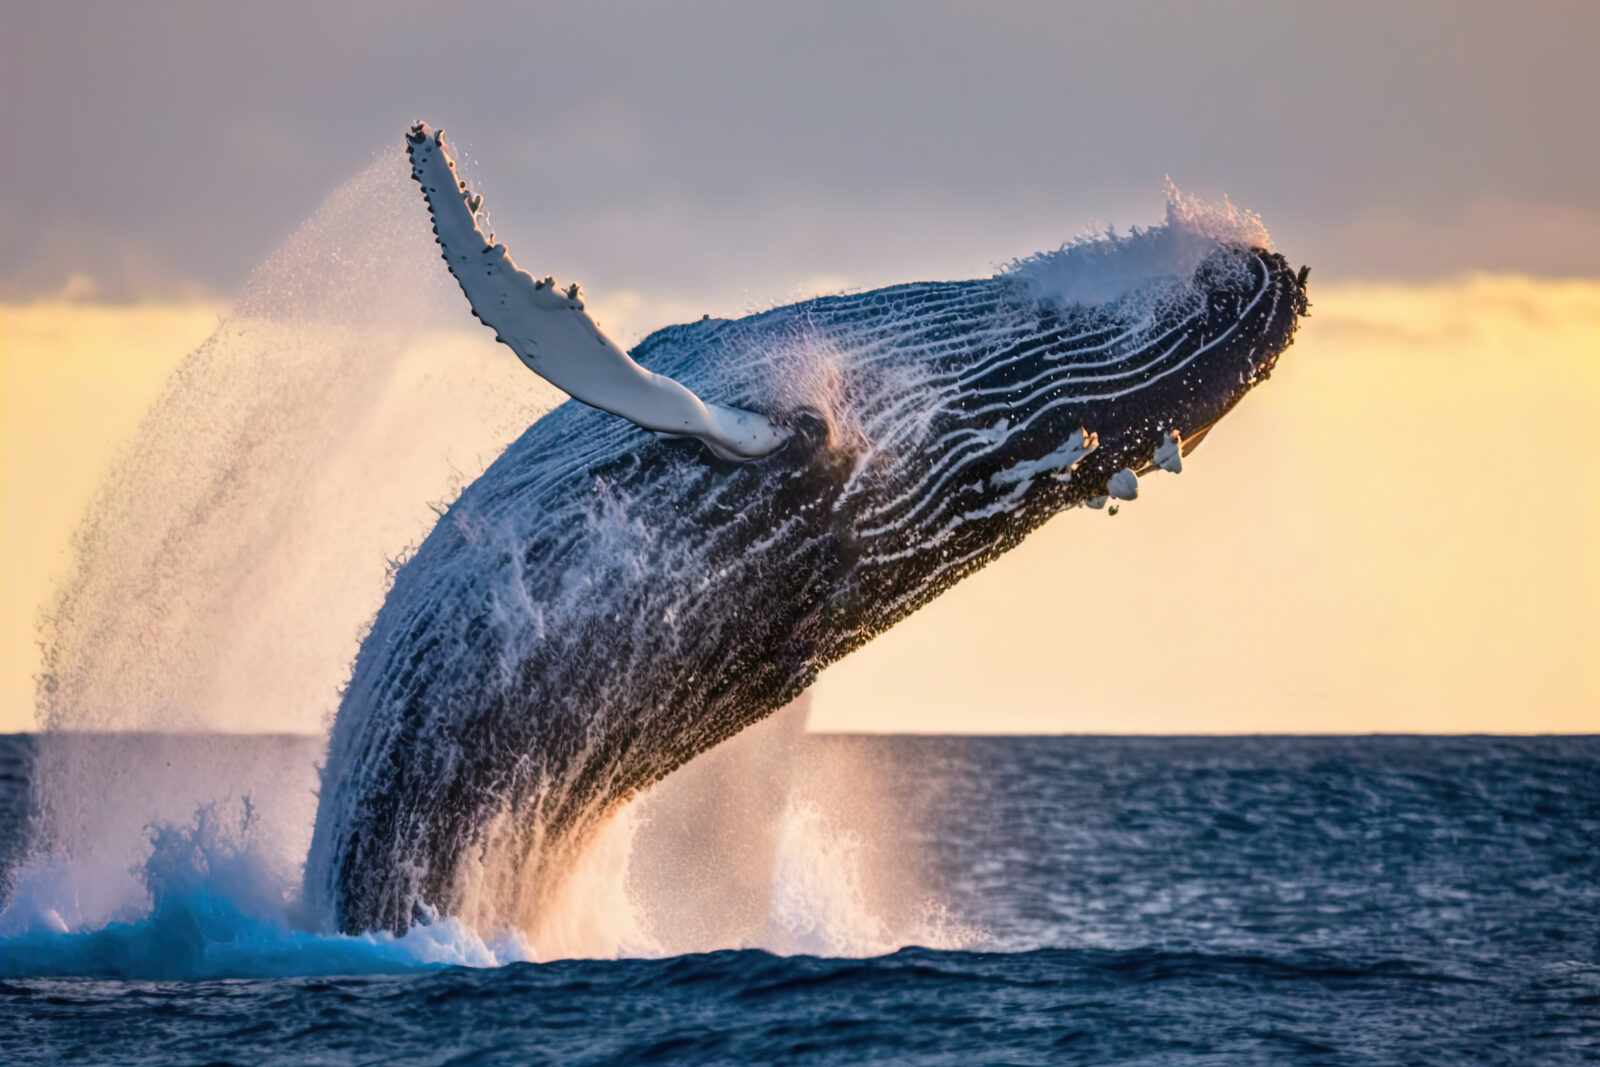 A whale breaching water.